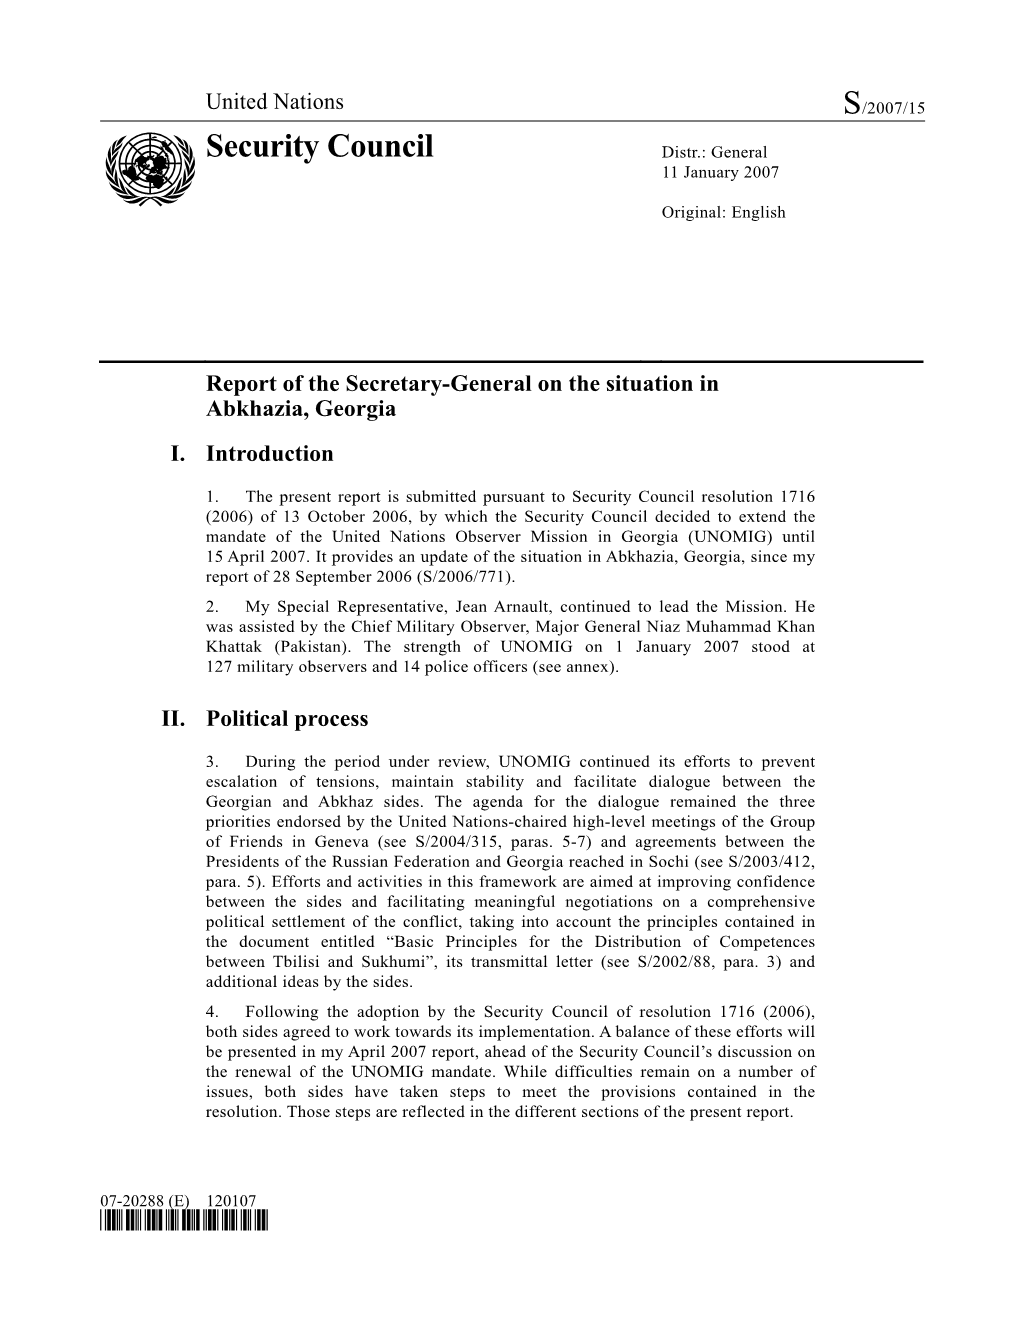 Security Council Distr.: General 11 January 2007